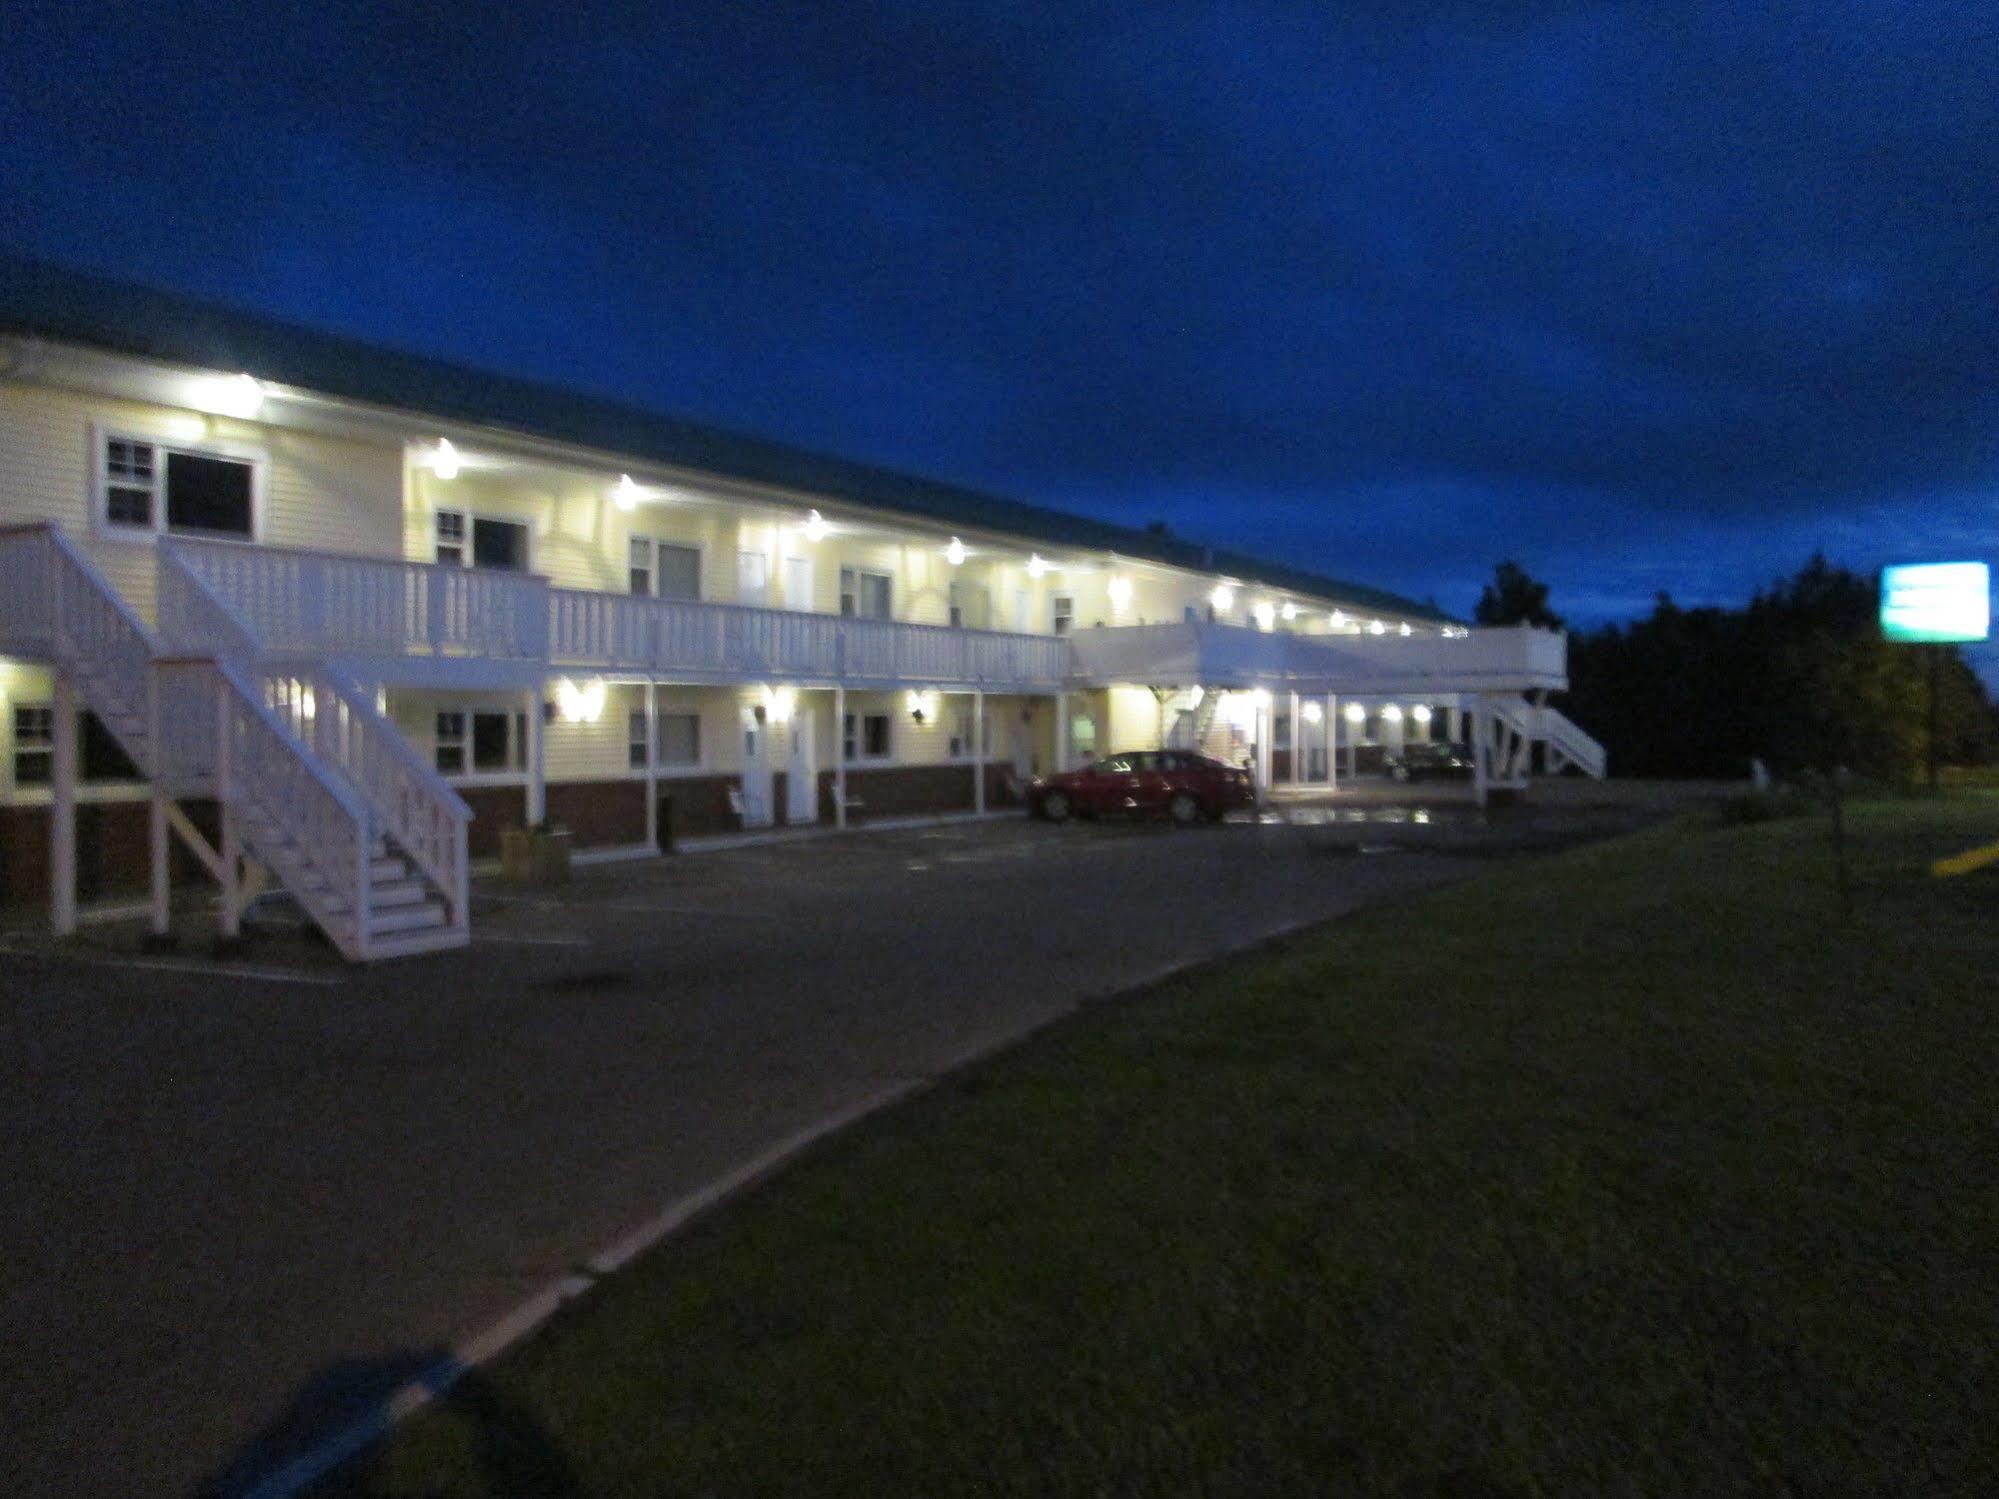 Scenic Motel Moncton Exterior photo